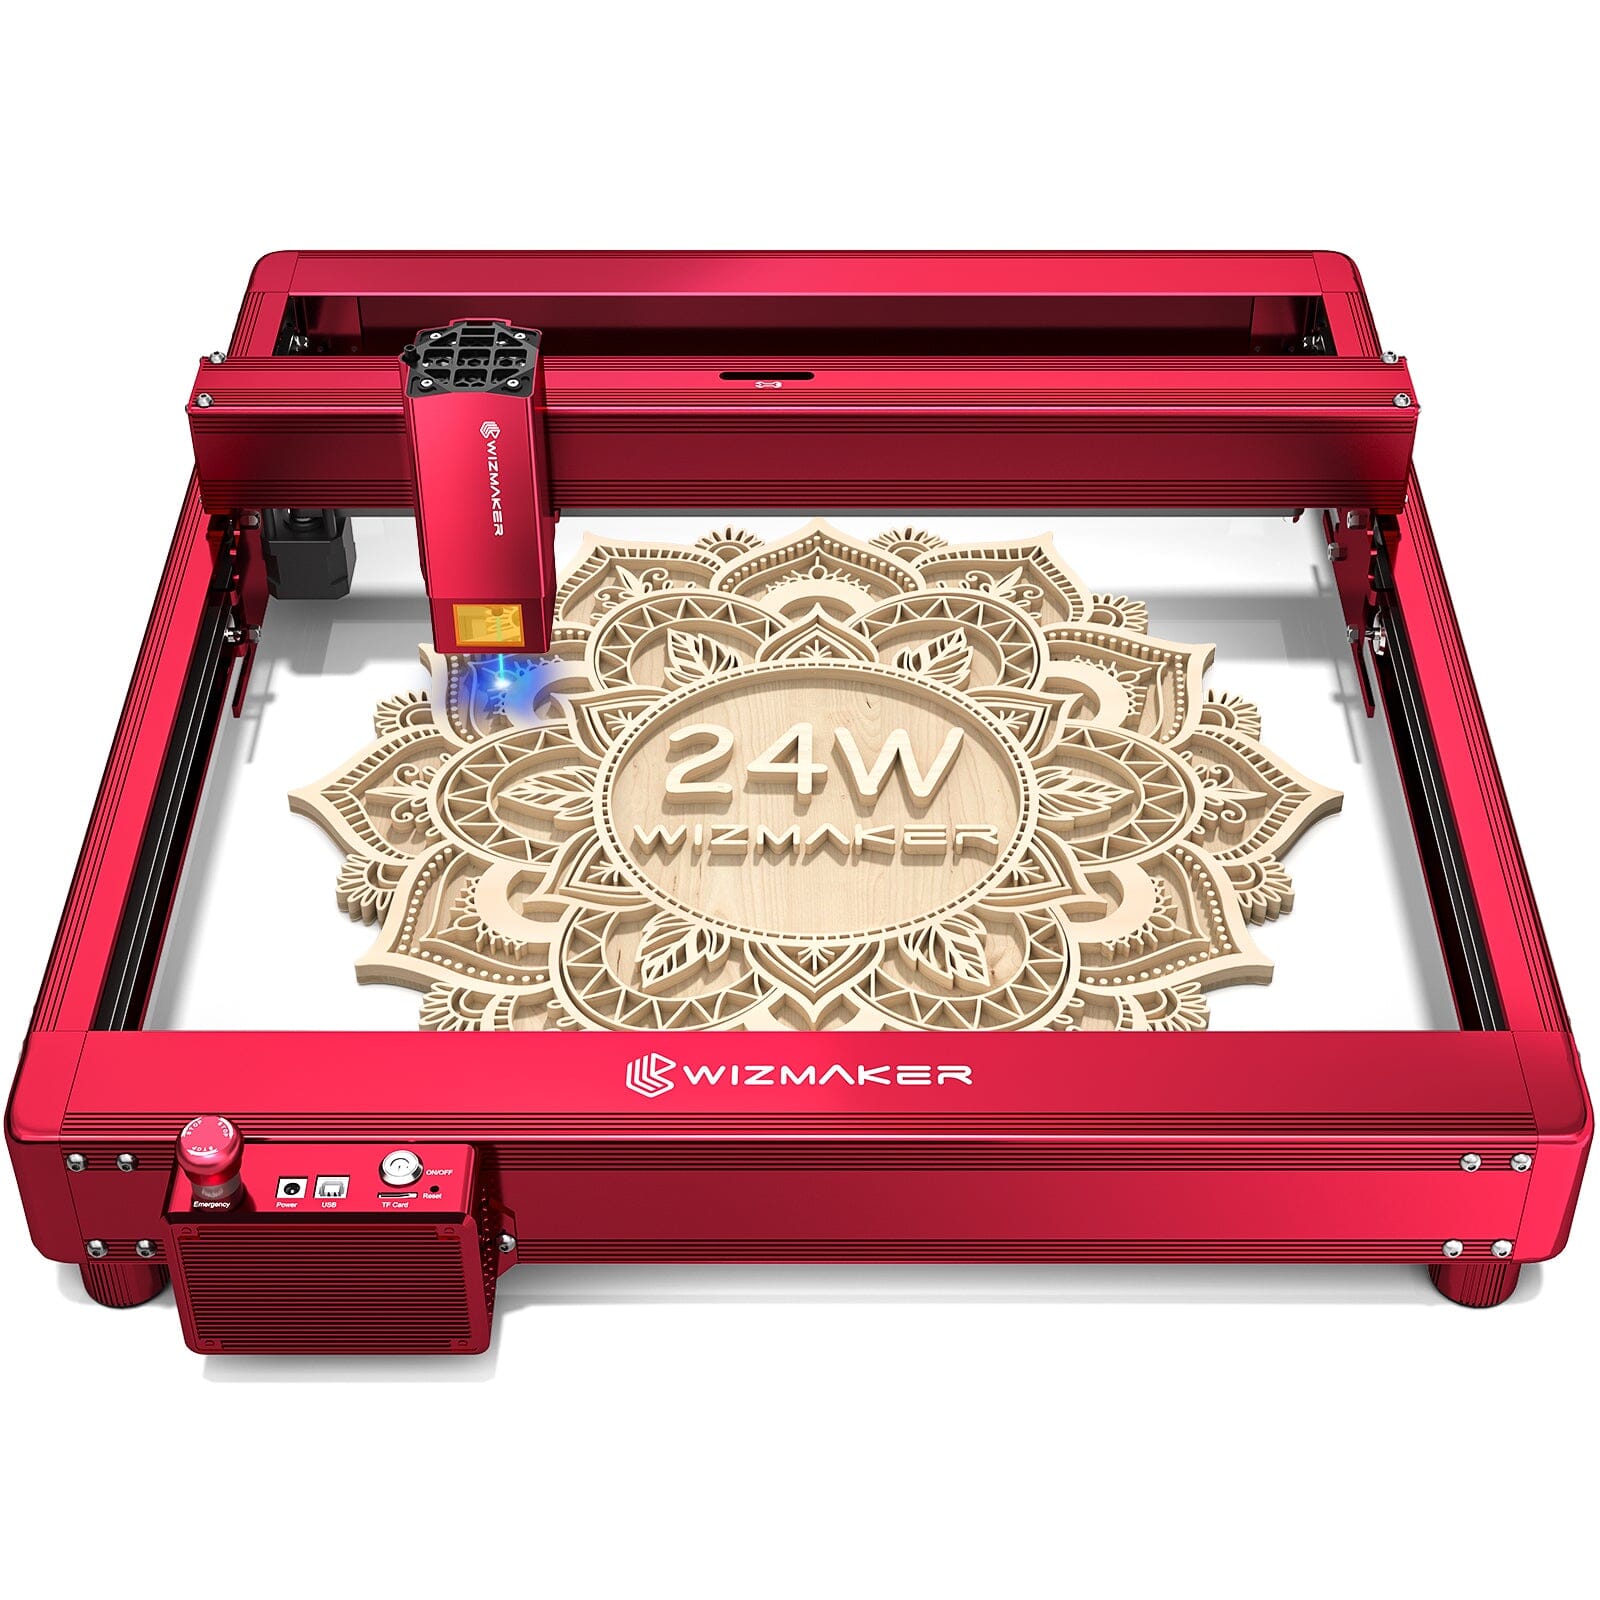 WIZMAKER L1 24W Laser Engraver Cutting Machine WIZMAKER Red EU Plug 